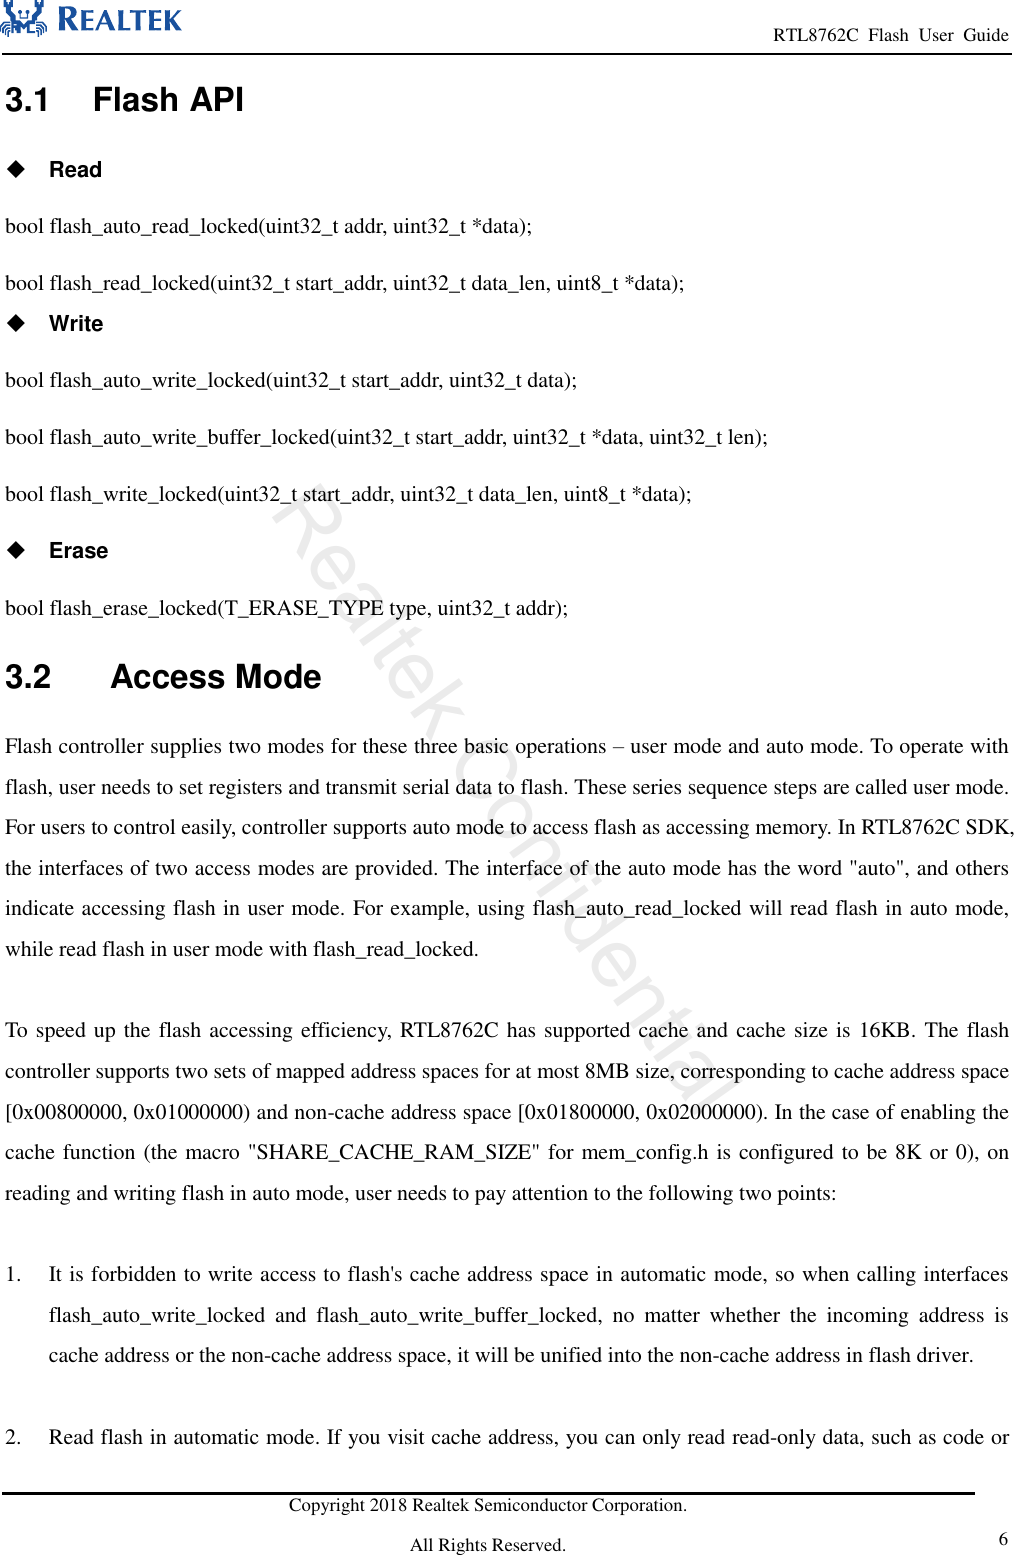 Page 6 of 12 - Flash User Guide RTL8762C EN